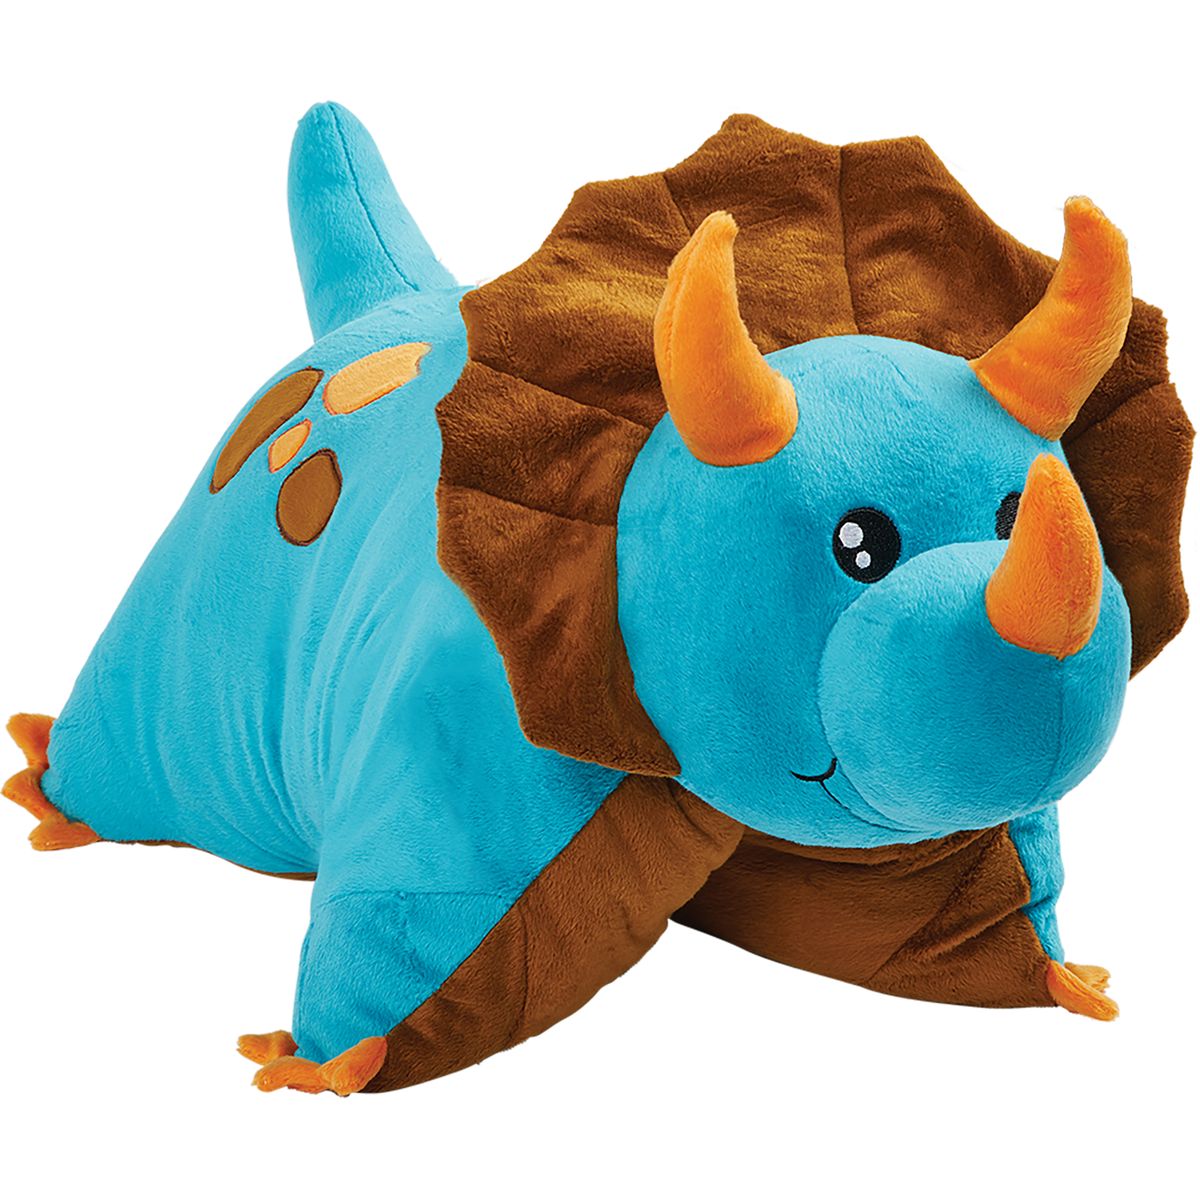 [RDY] [送料無料] Pillow Pets 18インチ ブルーダイナソーピロー ぬいぐるみ ペットのぬいぐるみ [楽天海外通販] | Pillow Pets 18" Blue Dinosaur Pillow Stuffed Animal Plush Toy Pet